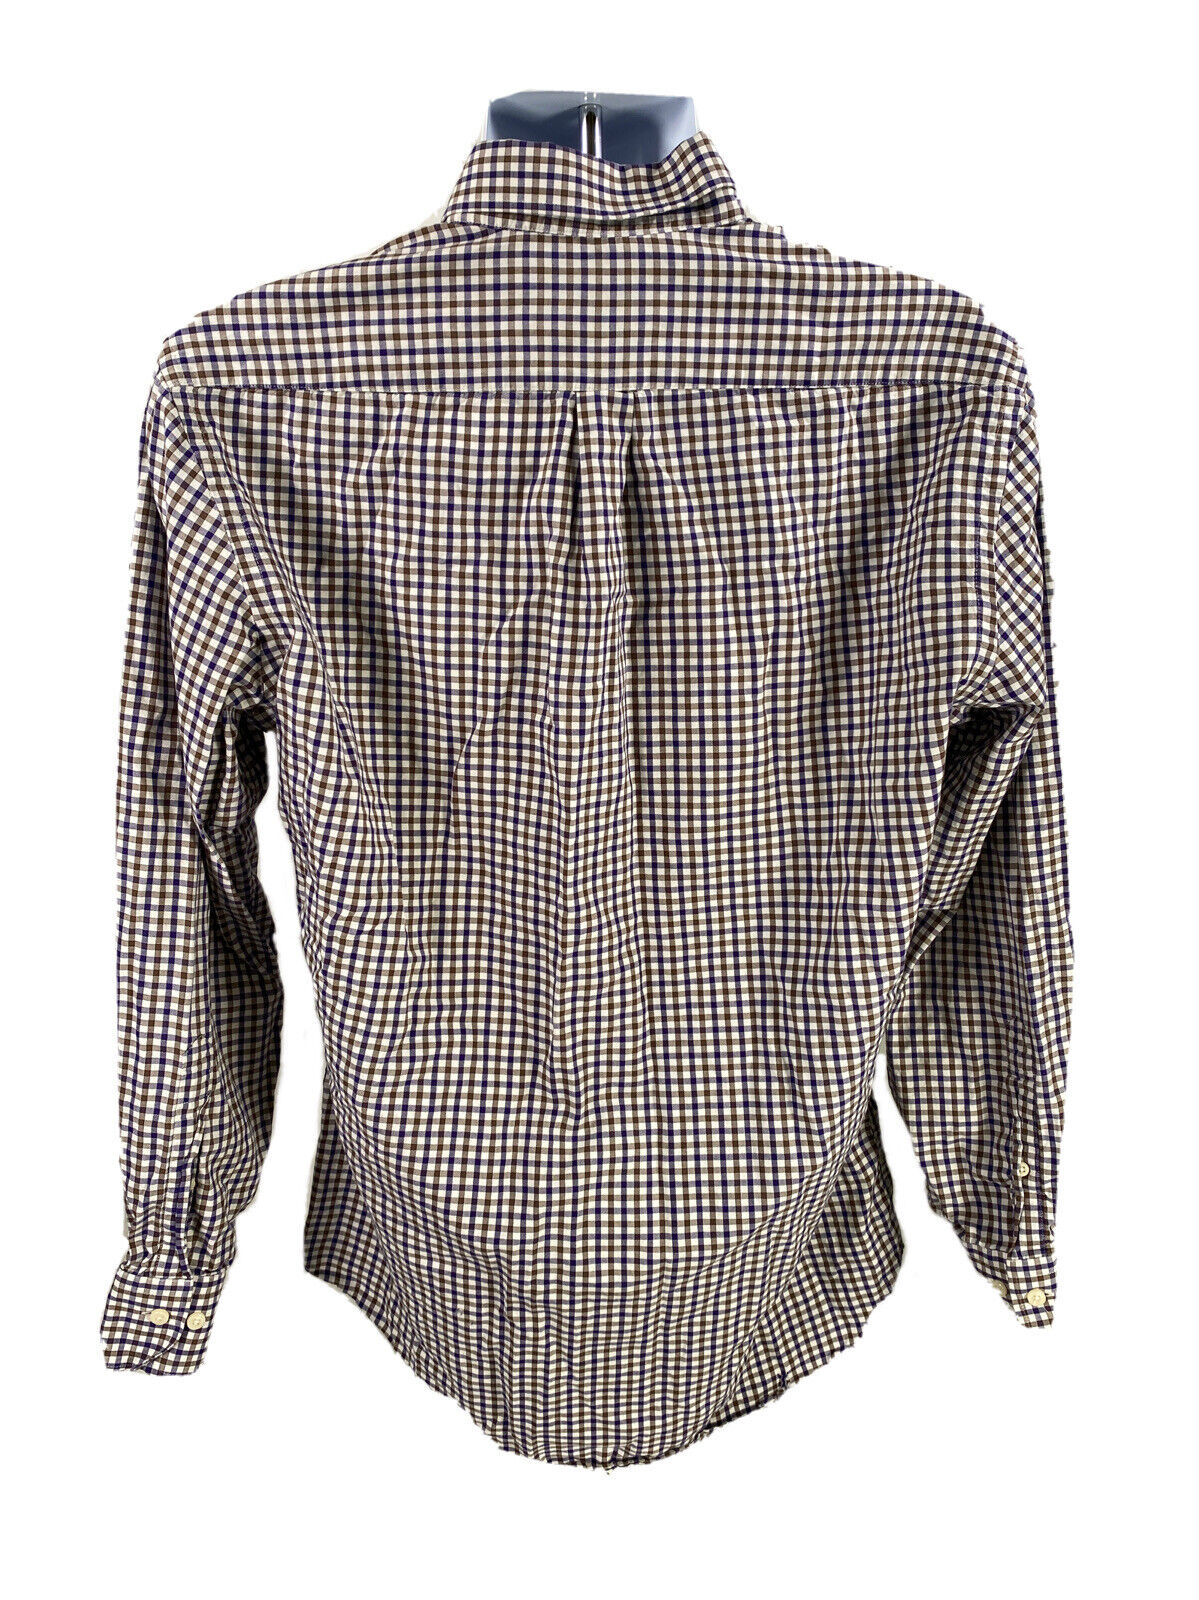 Peter Millar Men's Purple/Brown Plaid Casual Button Up Shirt Sz M